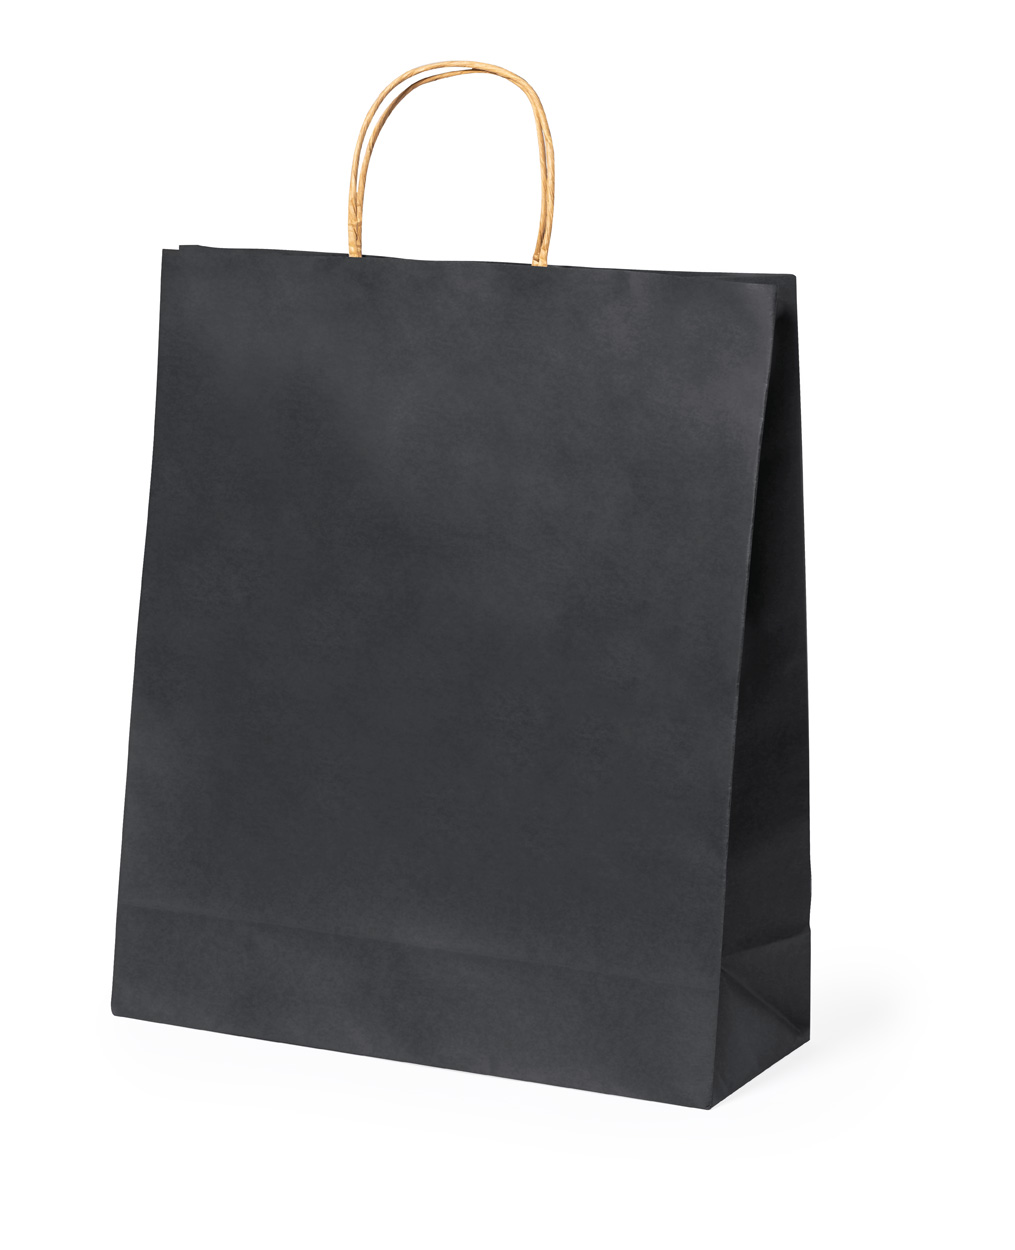 Mepus paper bag - black